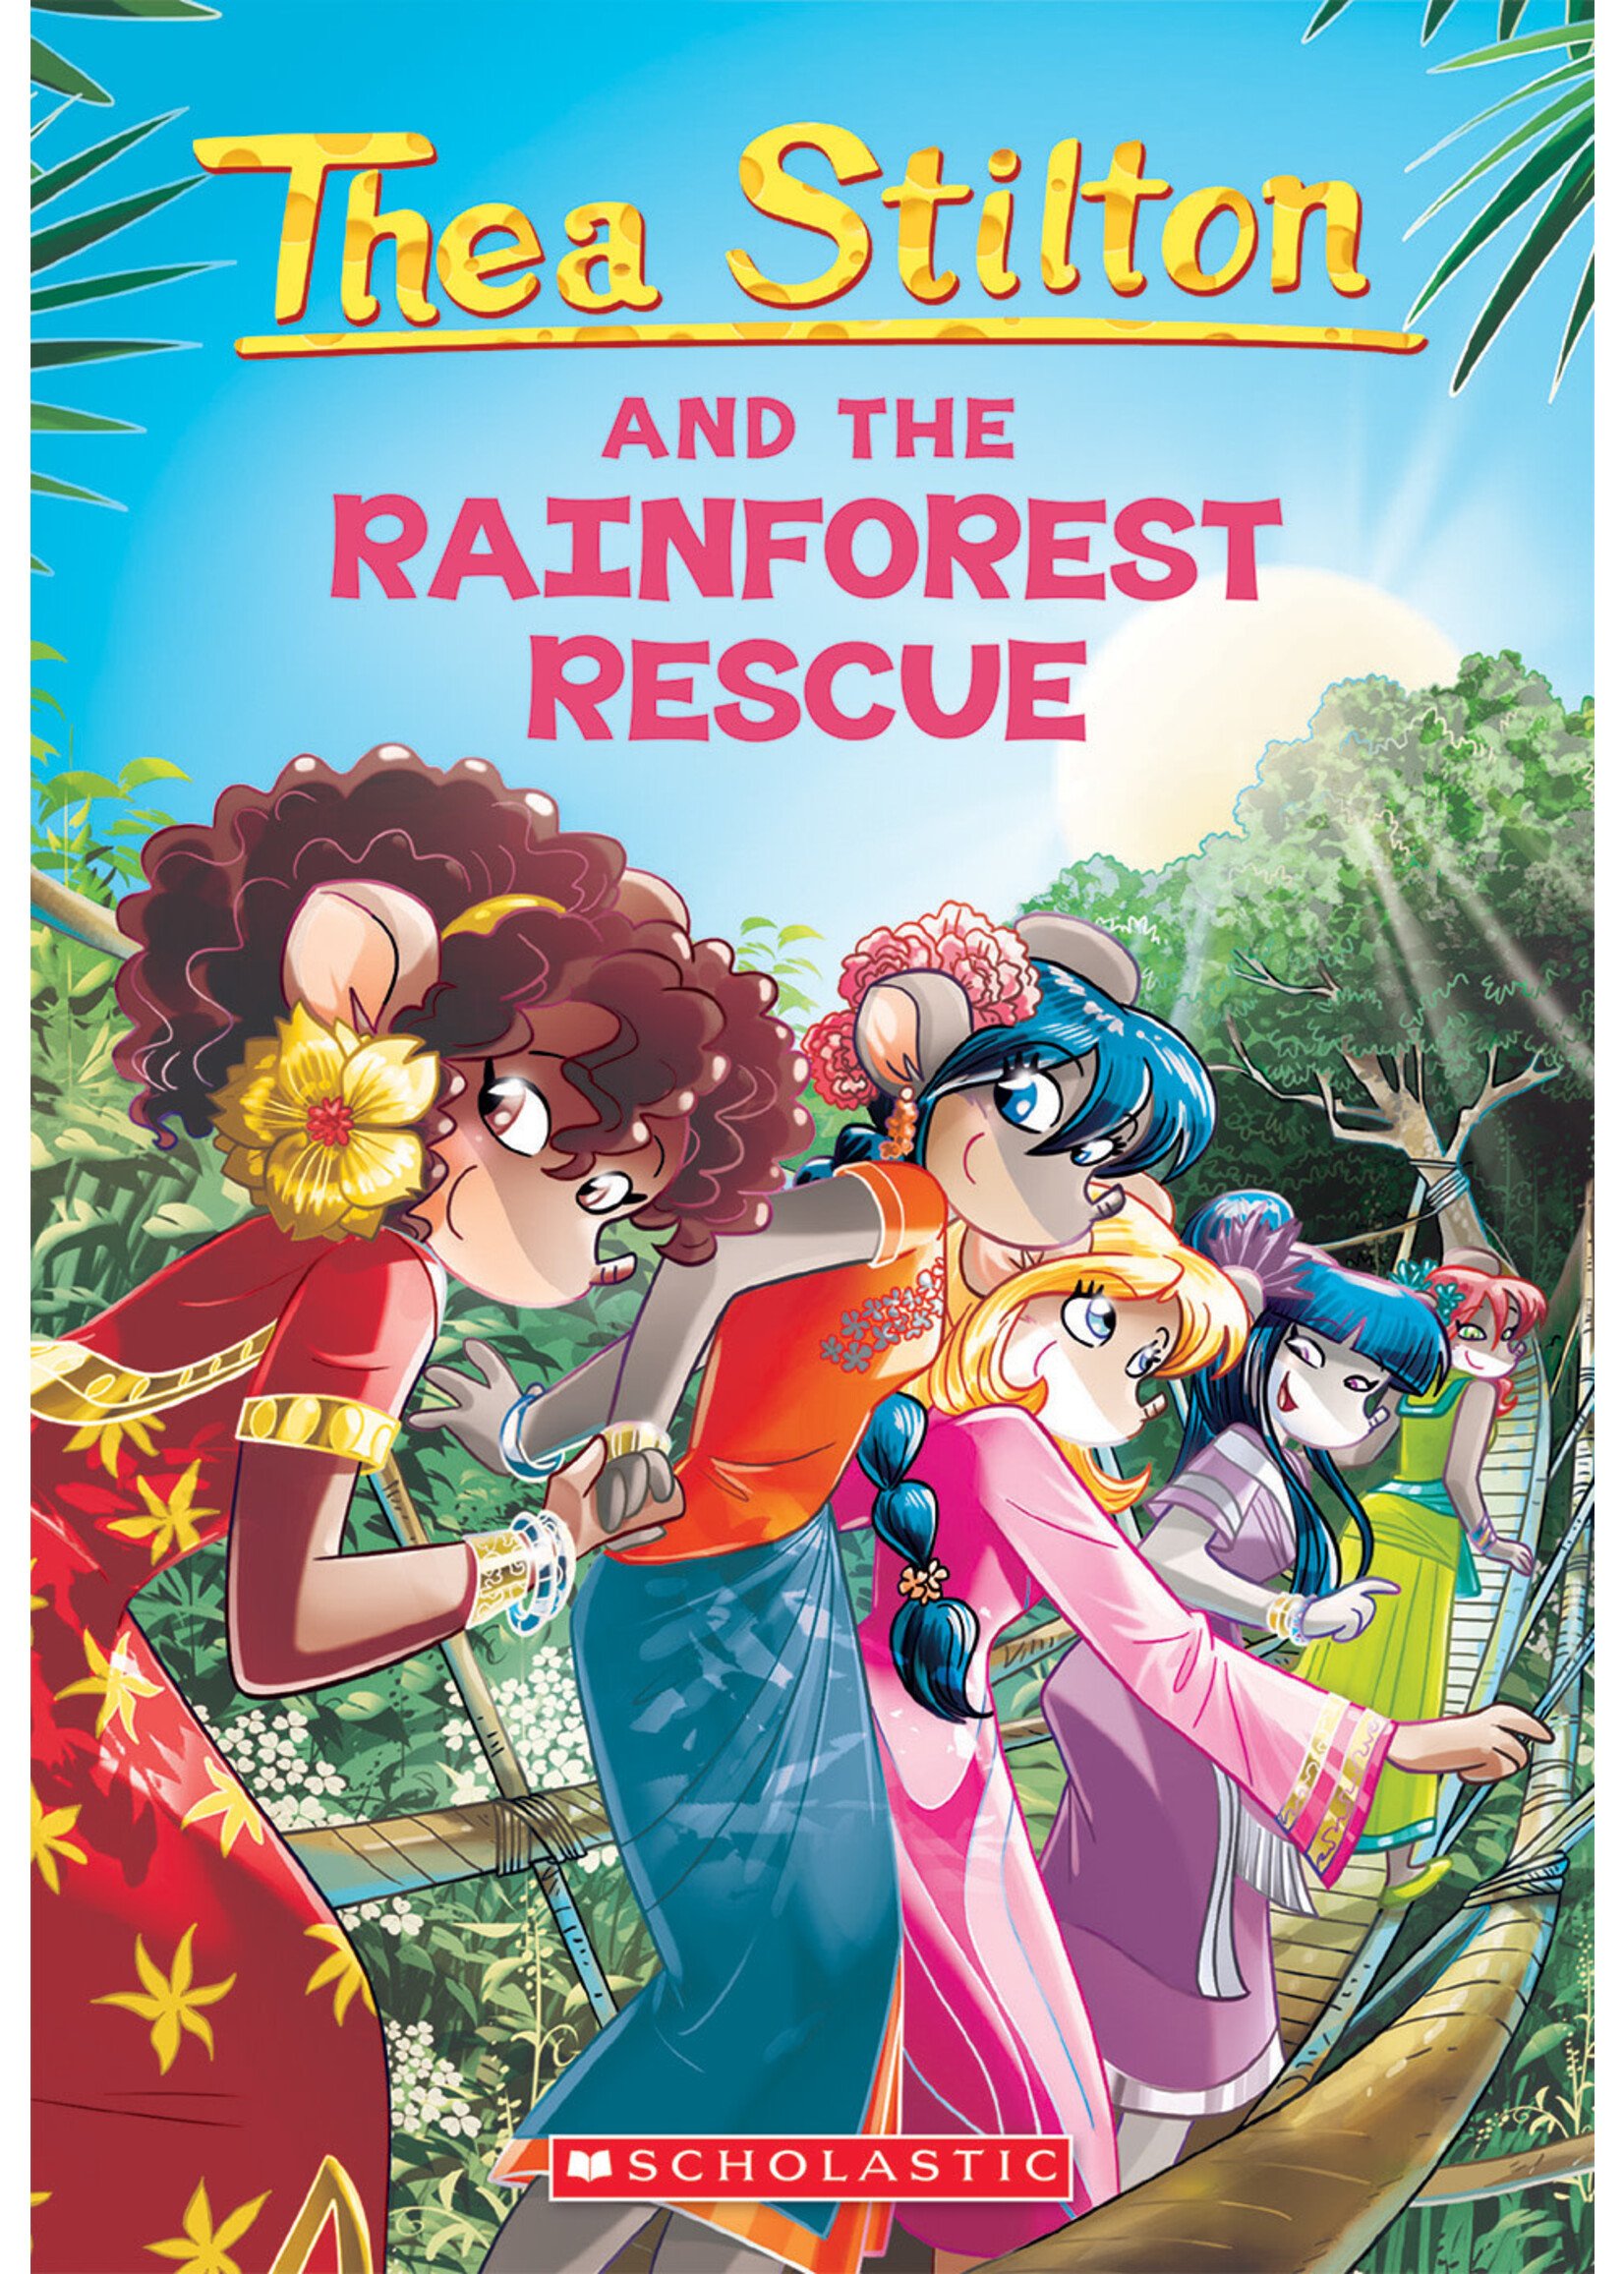 Thea Stilton and the Rainforest Rescue (Thea Stilton #32) by Thea Stilton